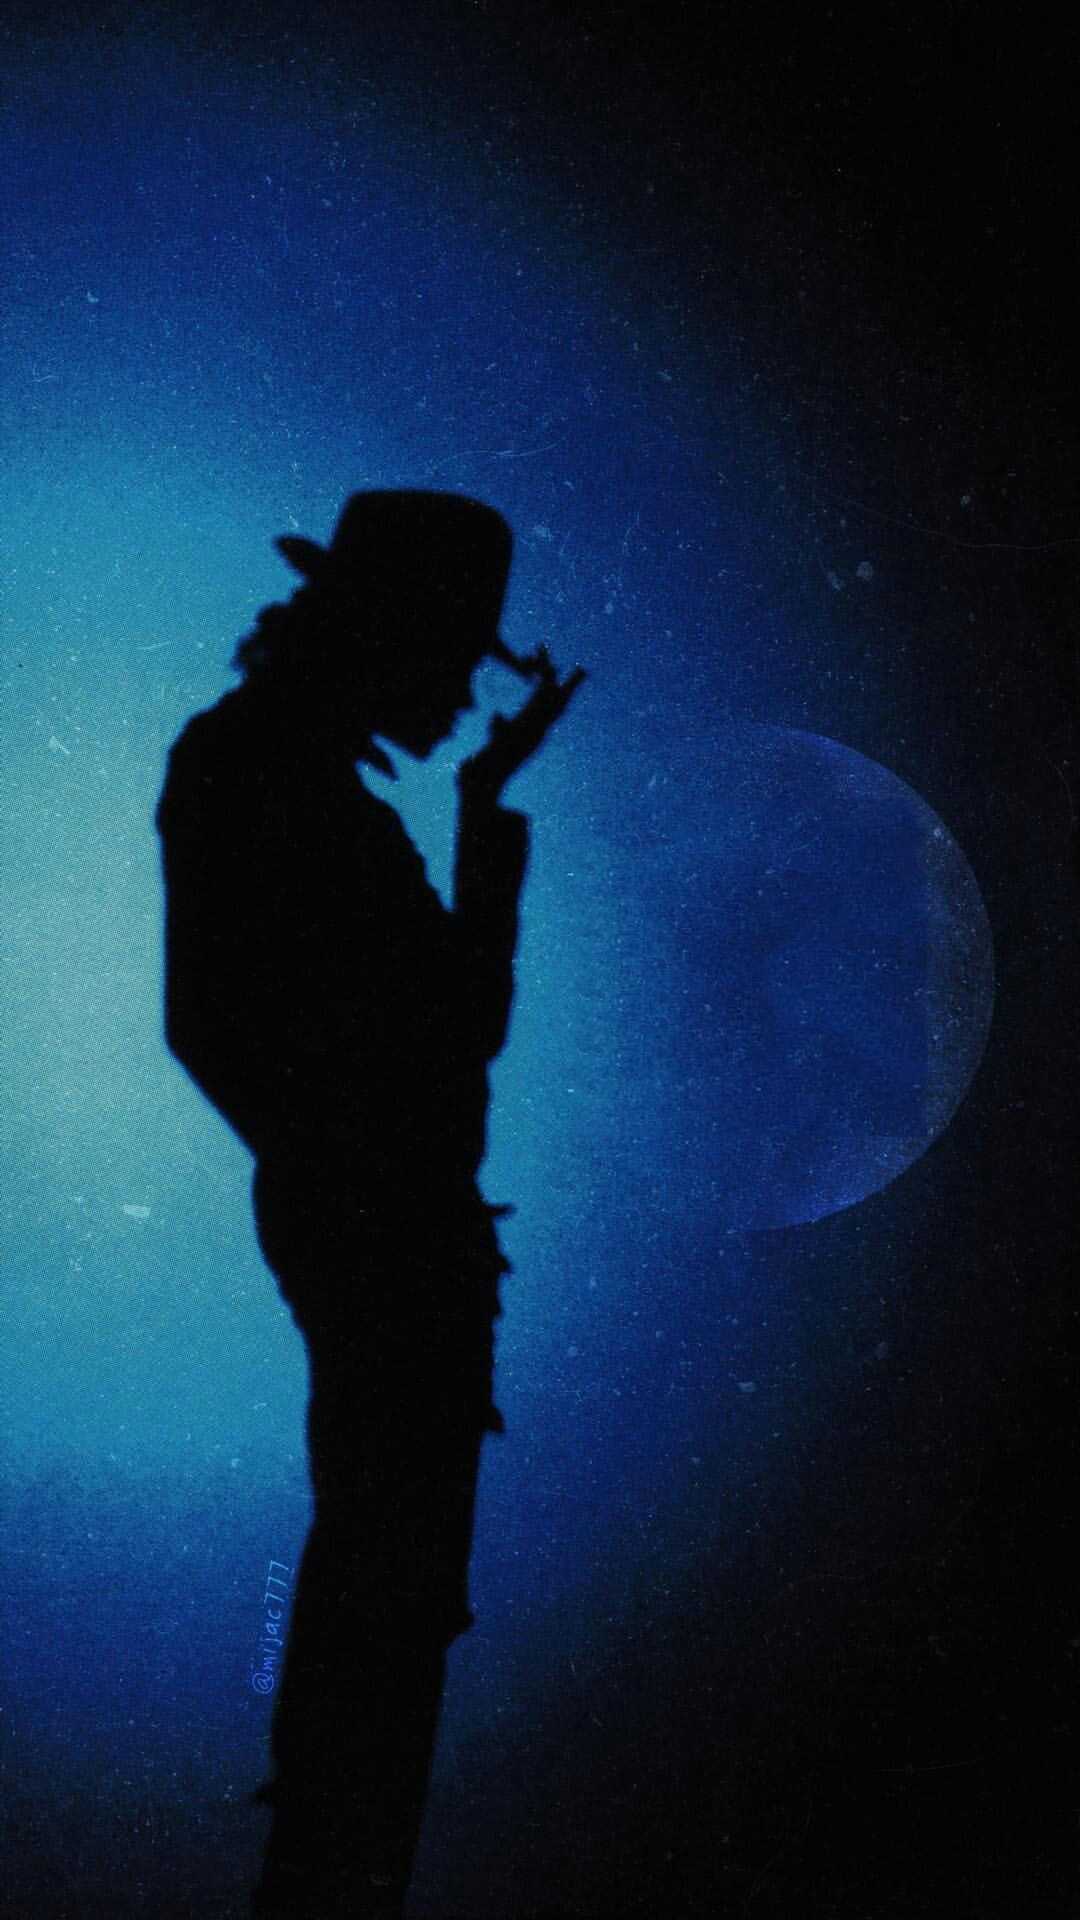 100+] Michael Jackson Wallpapers | Wallpapers.com